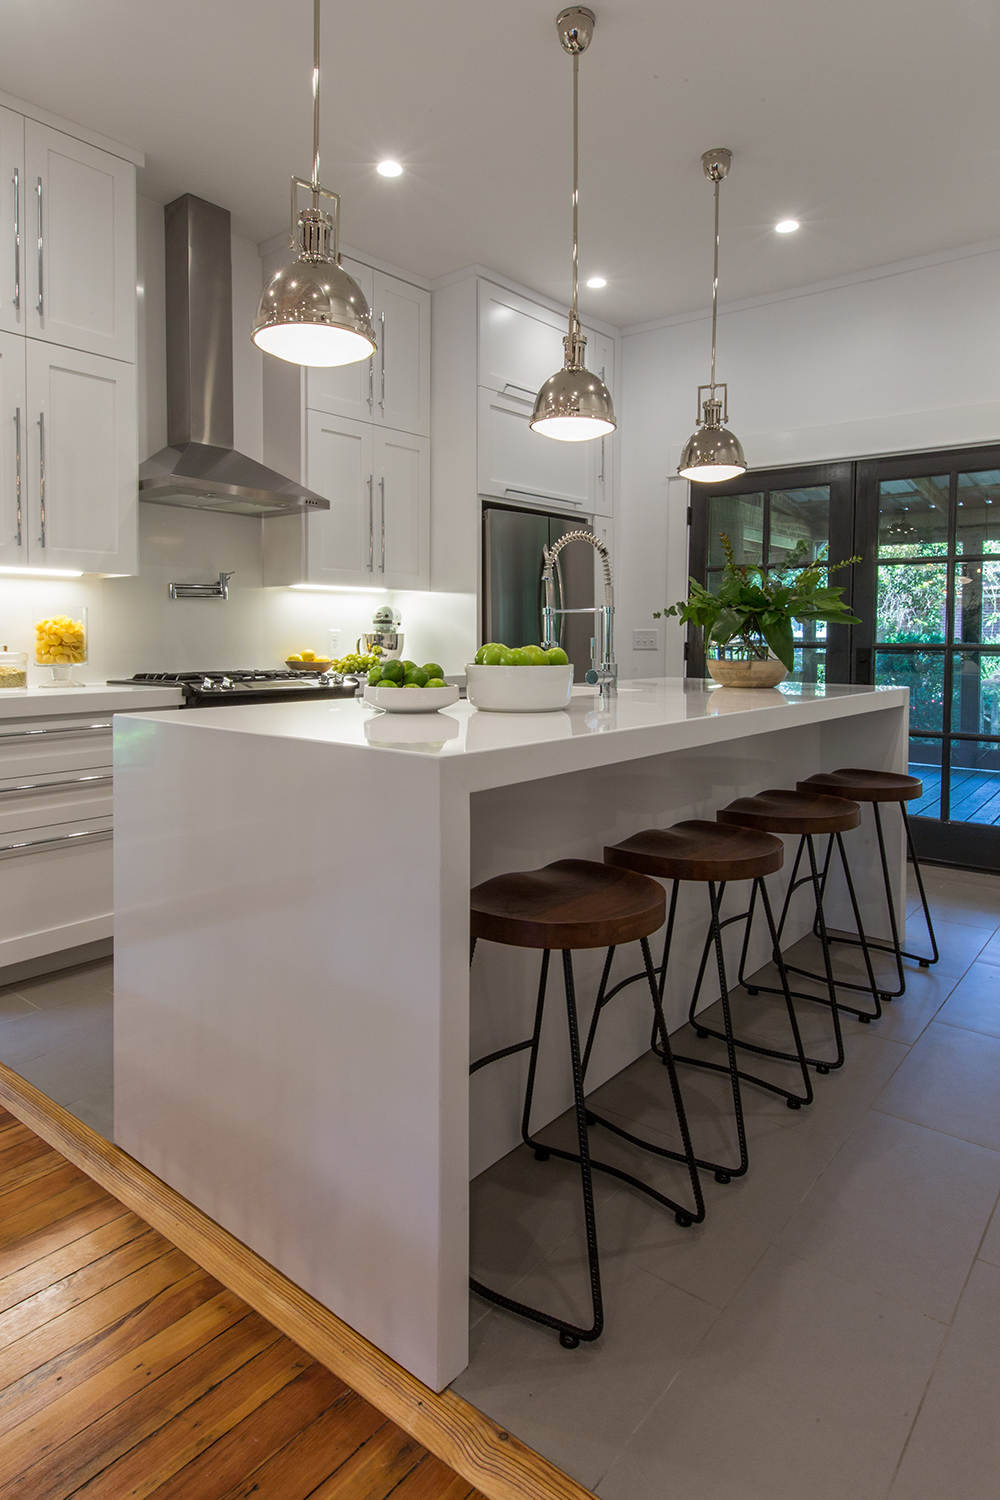 A white quartz countertop in an open concept kitchen.